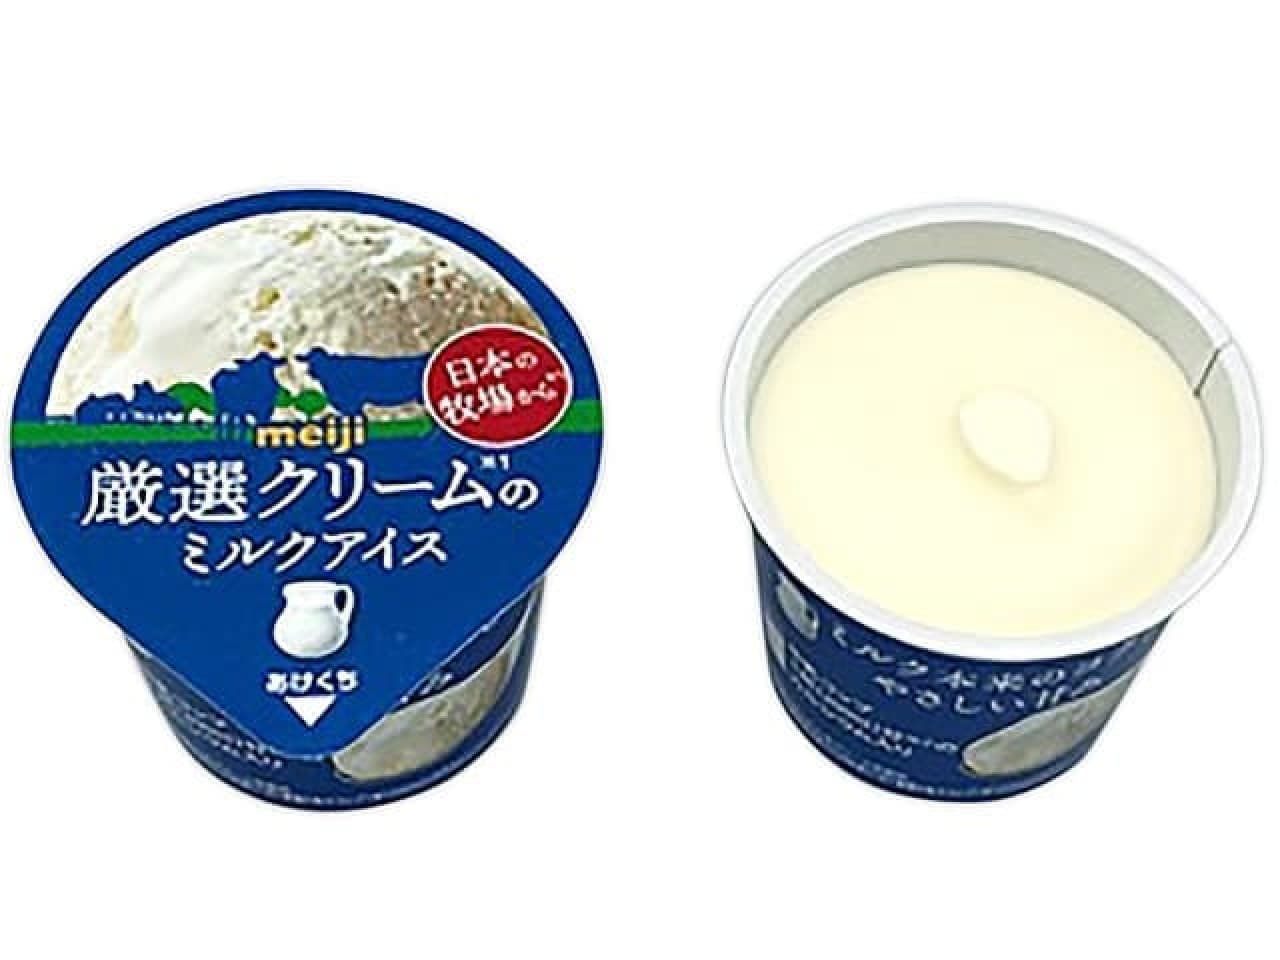 7-ELEVEN "Meiji Selected Cream Milk Ice Cream